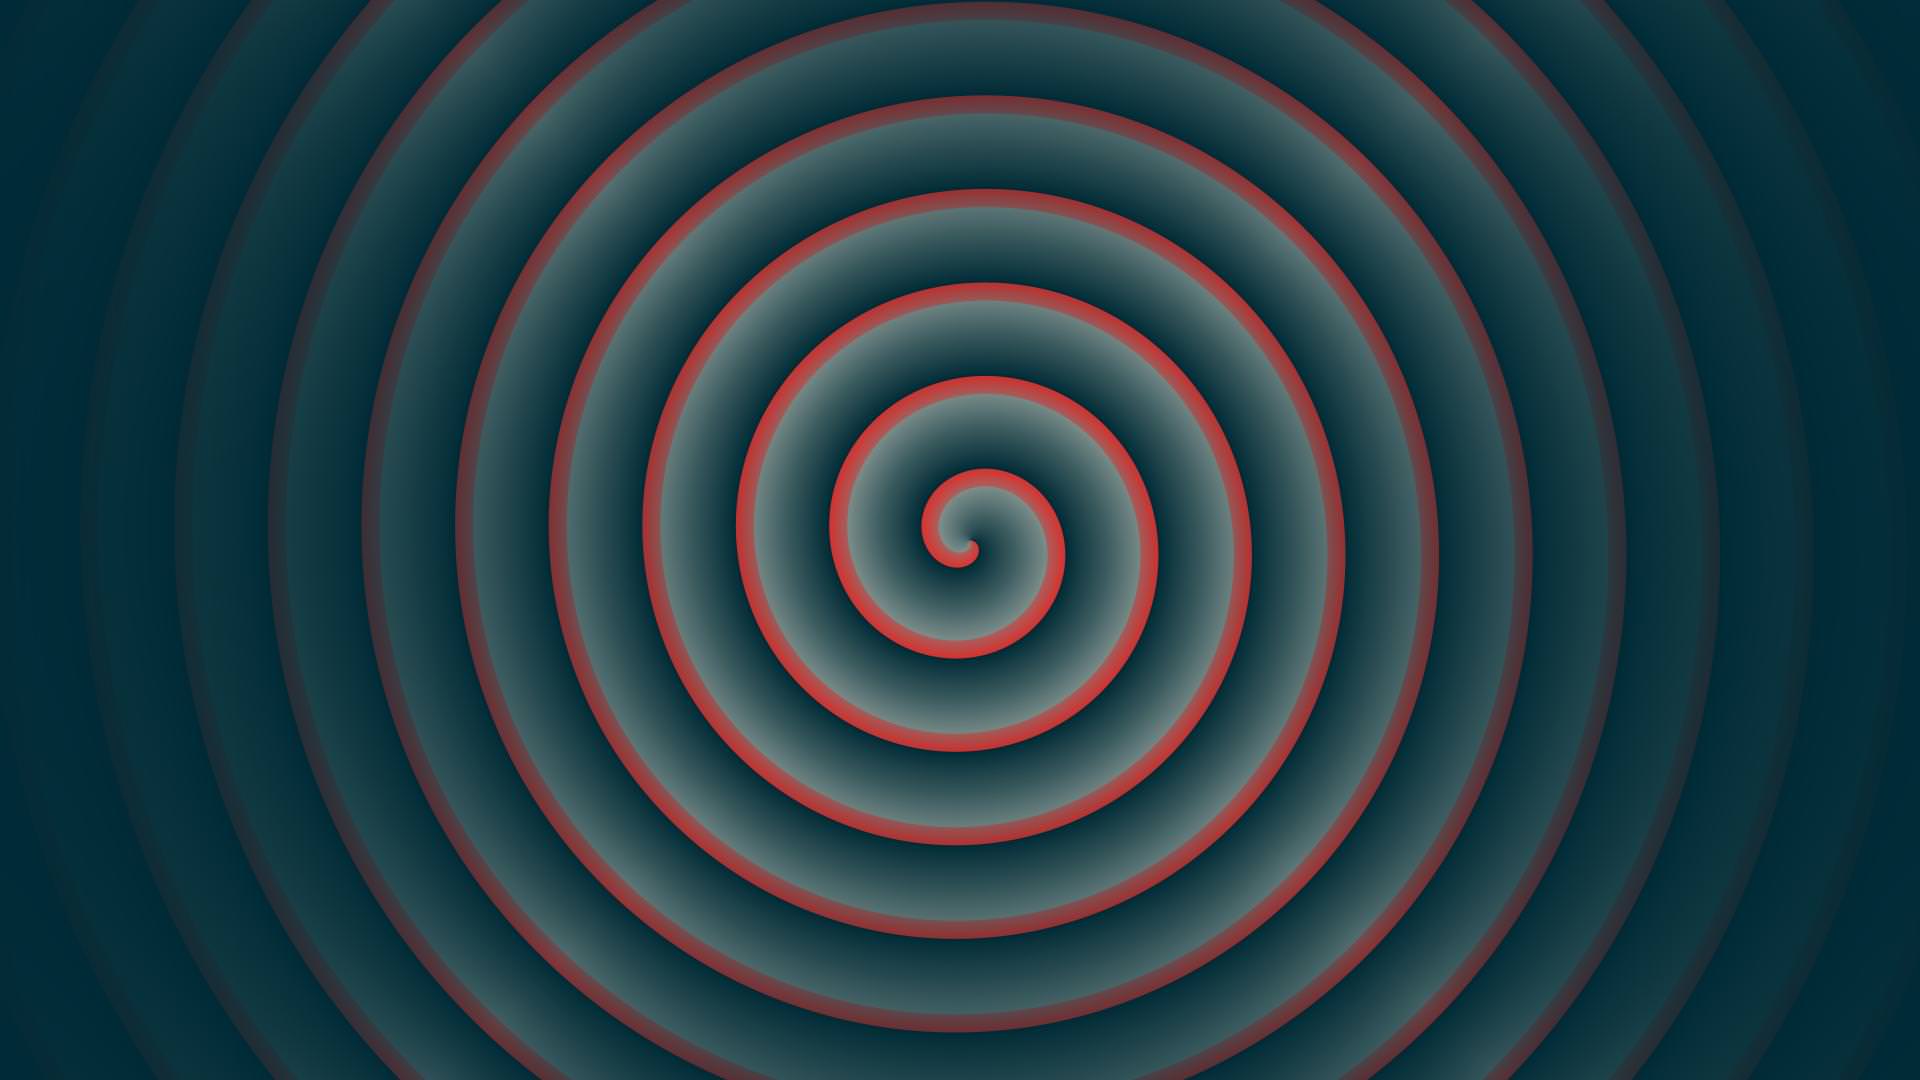 Solarized Swirl for my Shell Theme (1920 x 1080)